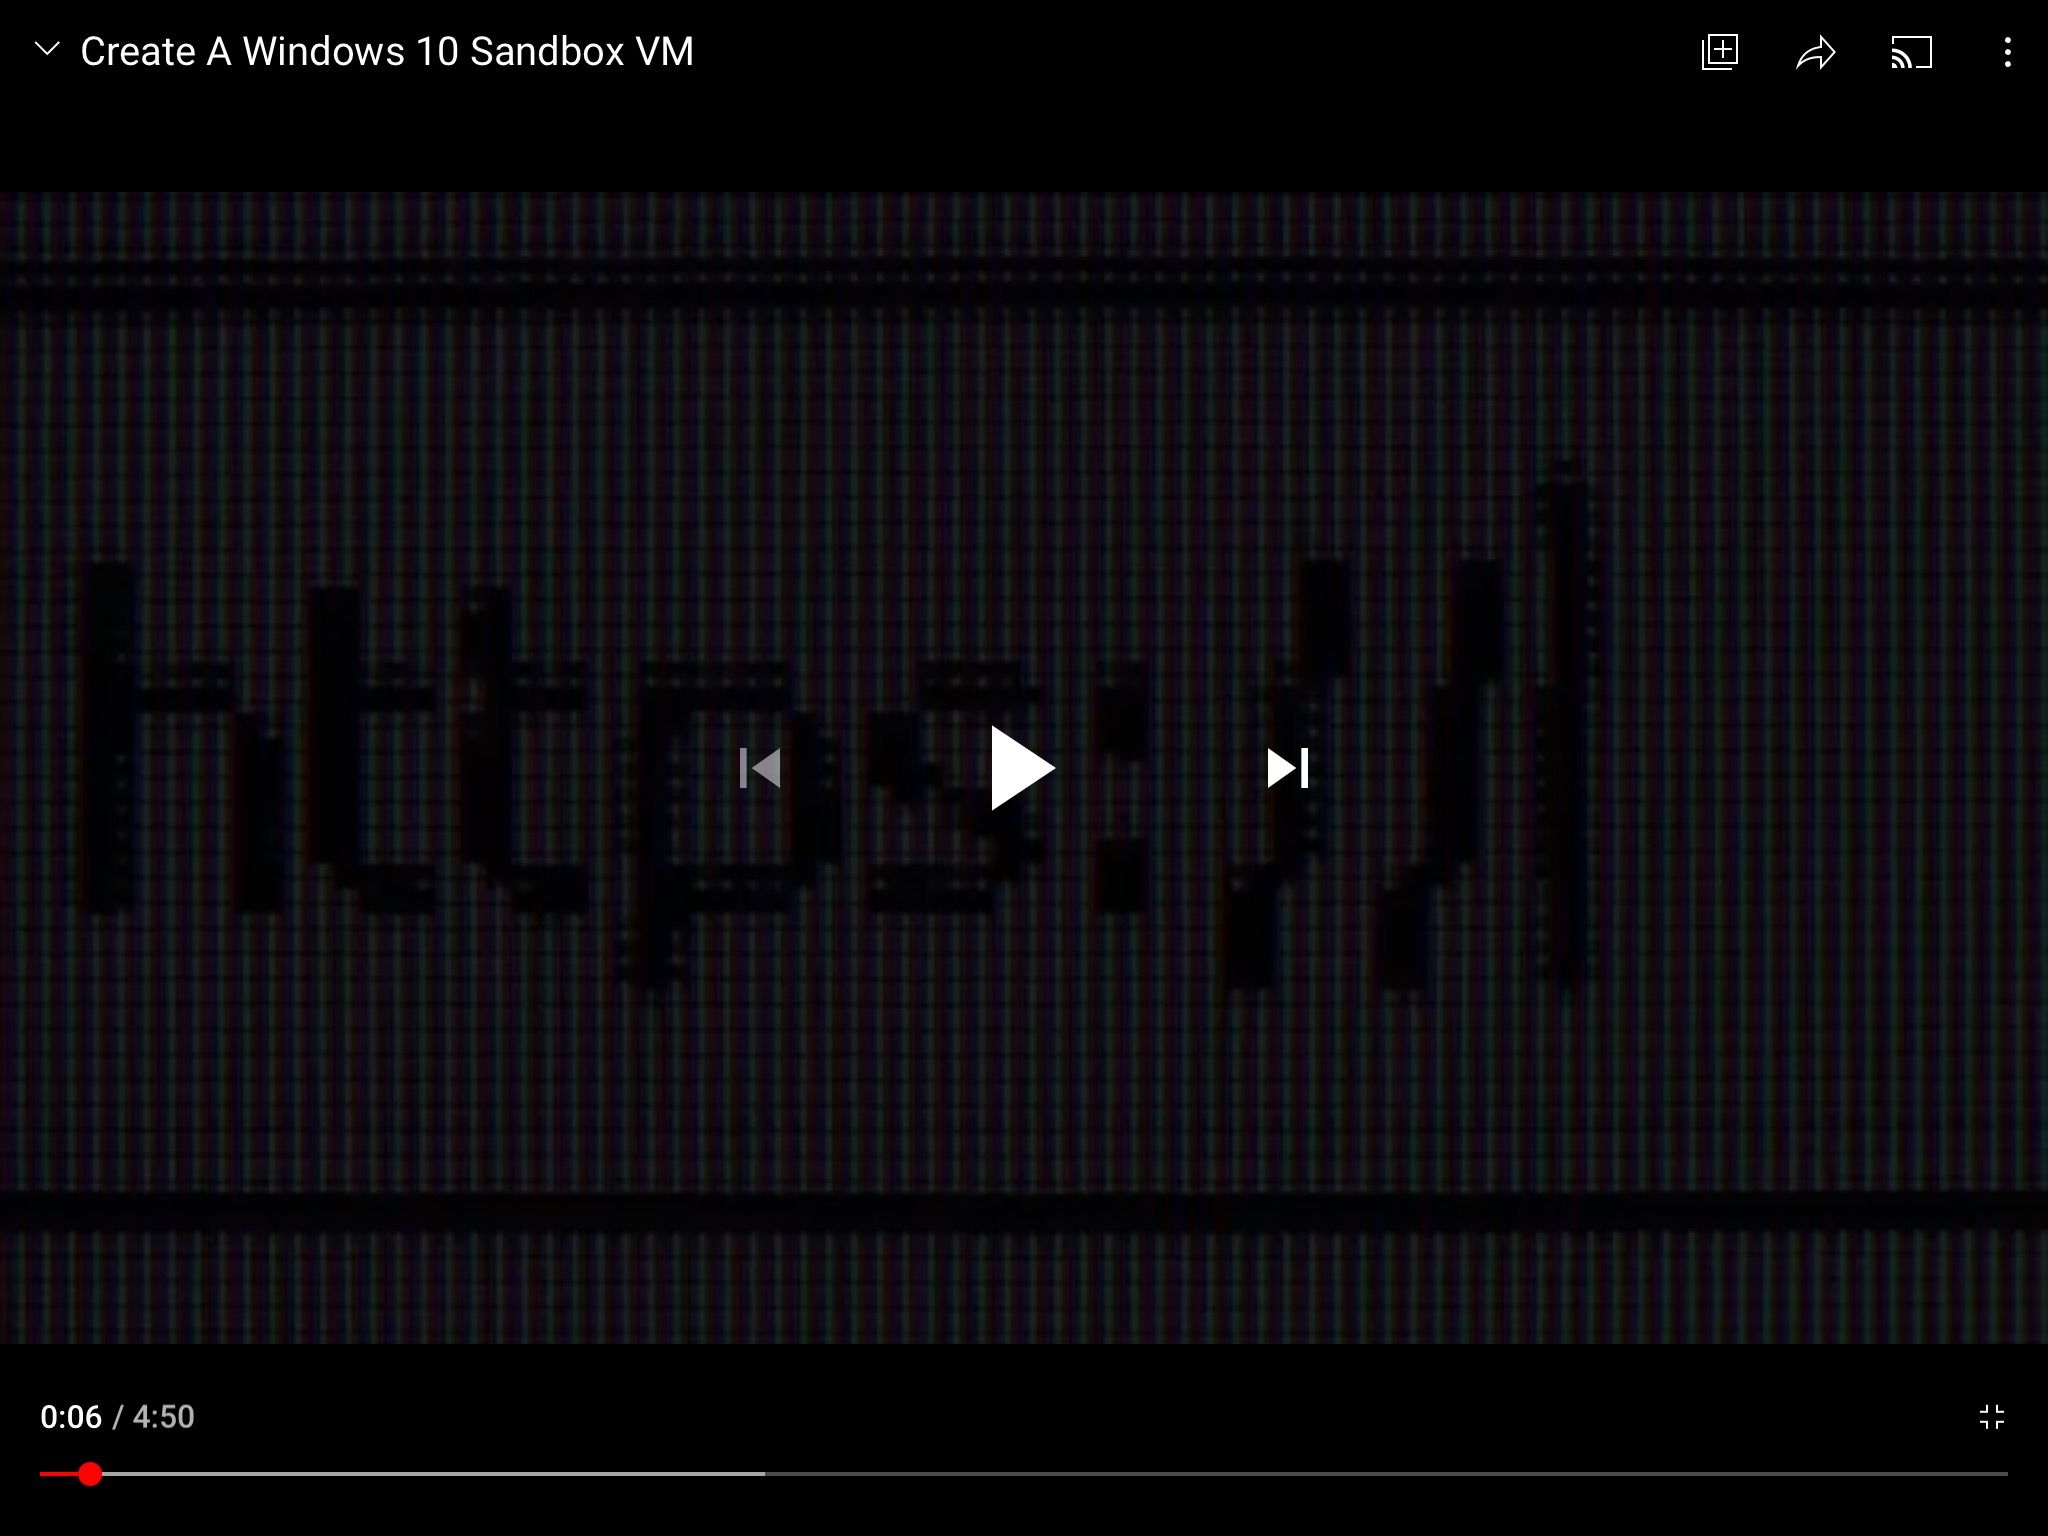 Creating a Sandbox VM on VMware Workstation 14 Video https://youtu.be/A3uBq4ksbqM